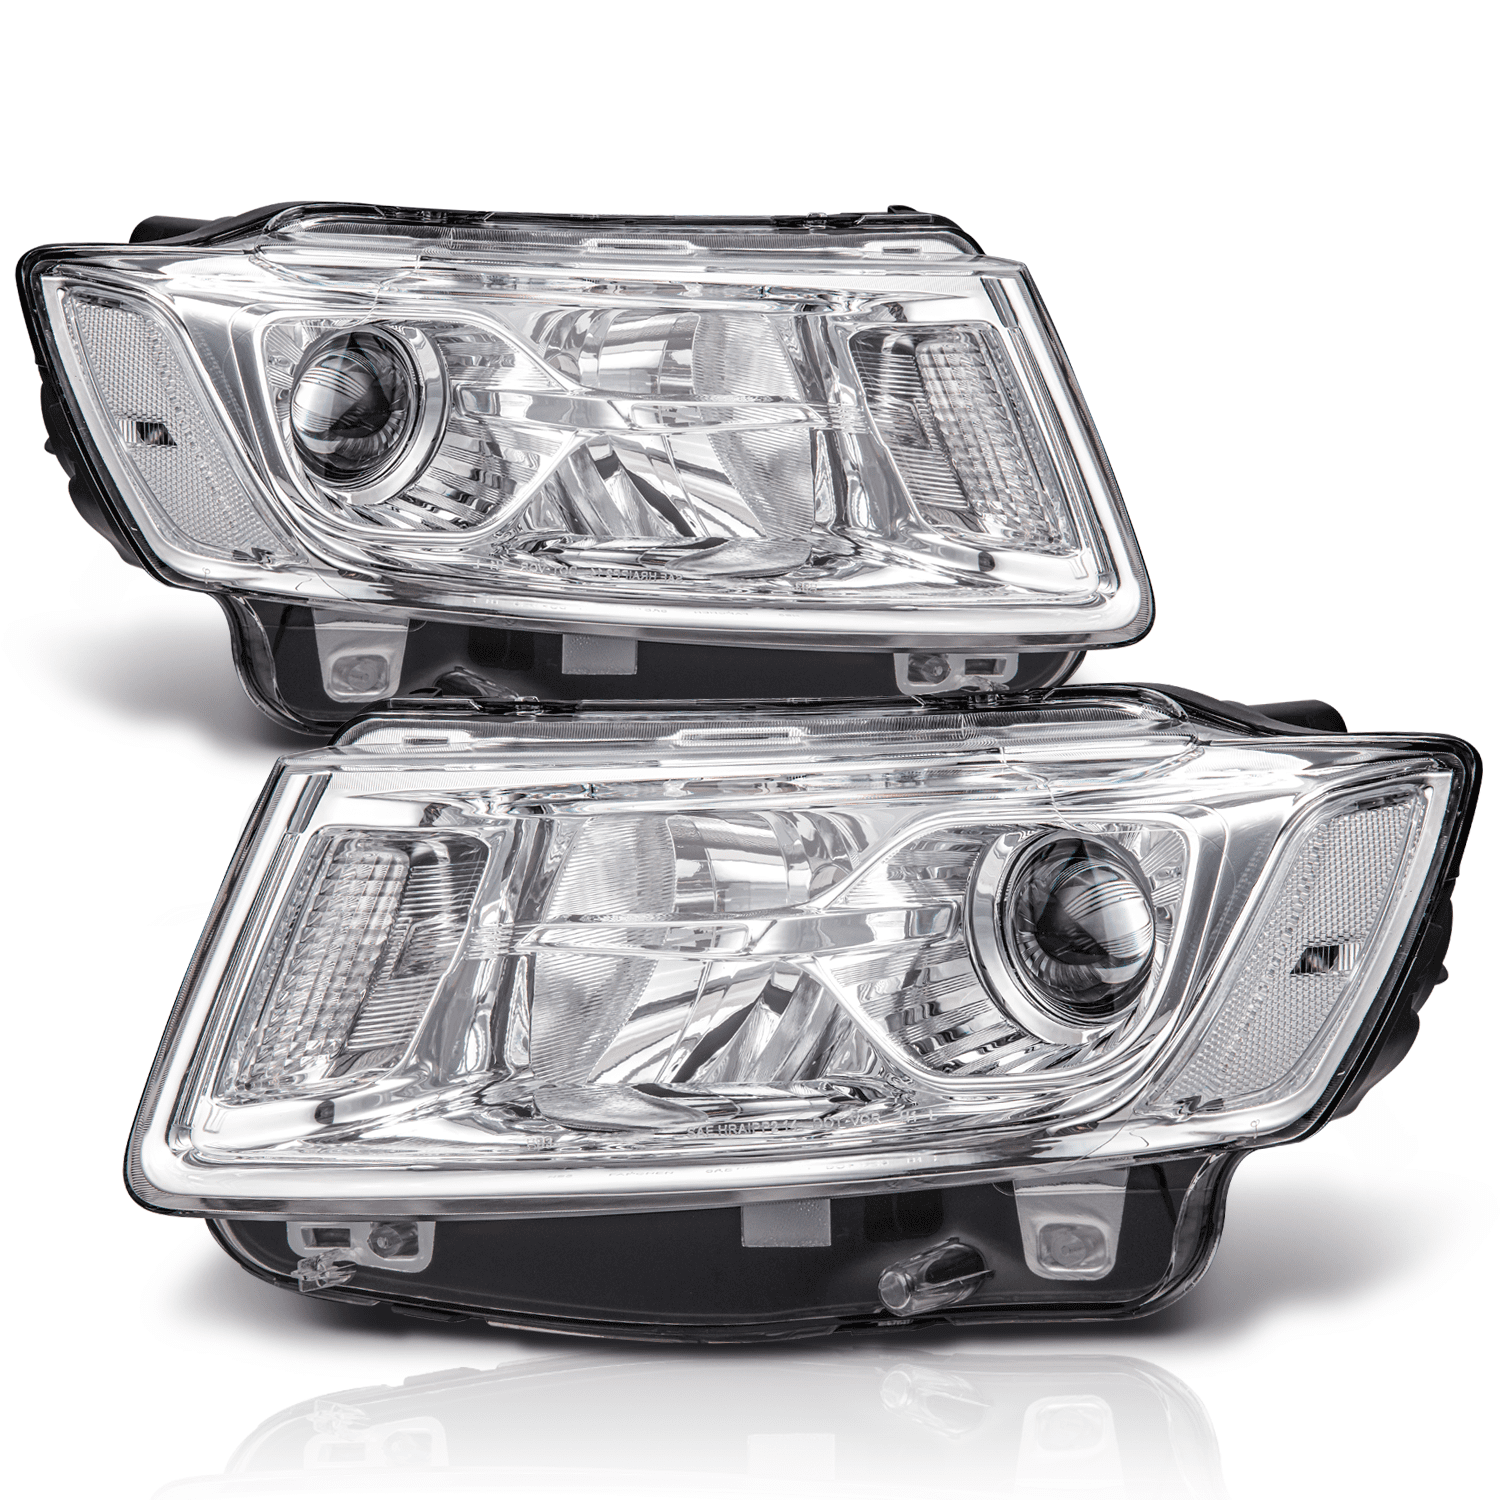 M-AUTO Headlights Headlamps W/ Halogen Bulbs, for 2014 2015 2016 Jeep Grand  Cherokee, Chrome Housing Clear Lens Clear Reflector 